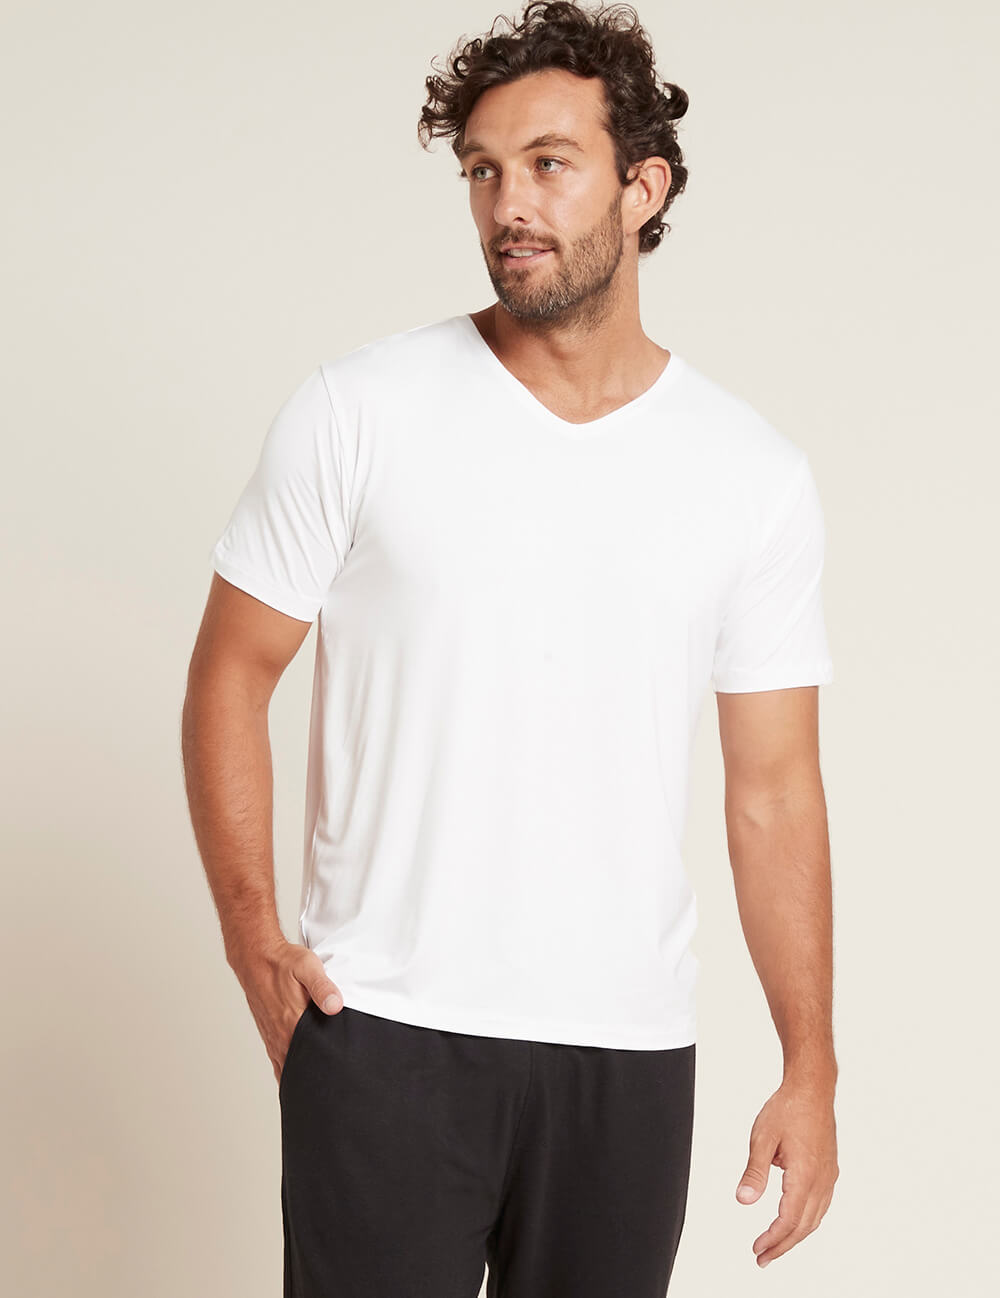 Boody Men's V-Neck T-Shirt in White Front